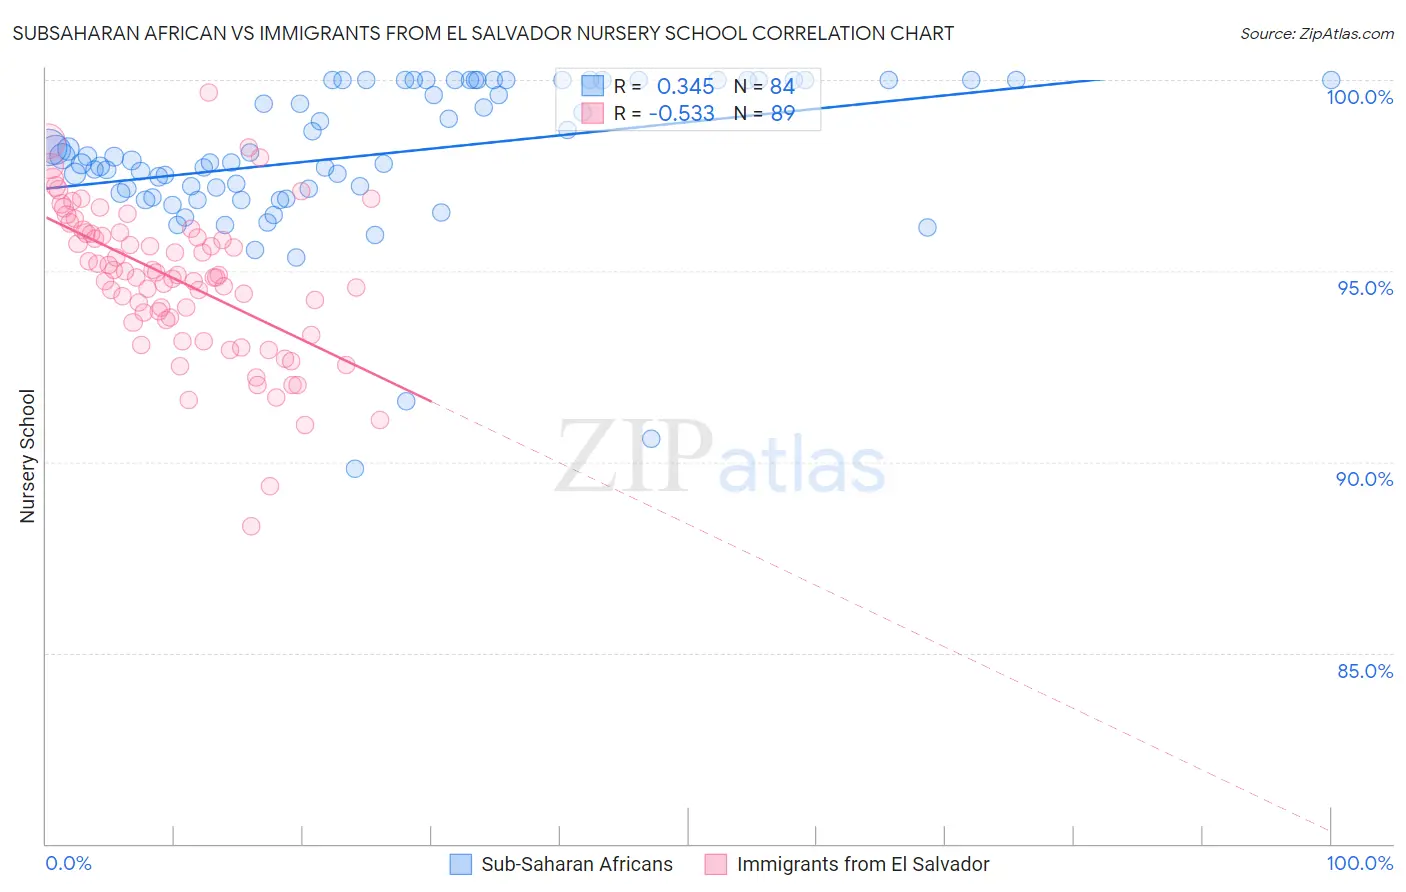 Subsaharan African vs Immigrants from El Salvador Nursery School